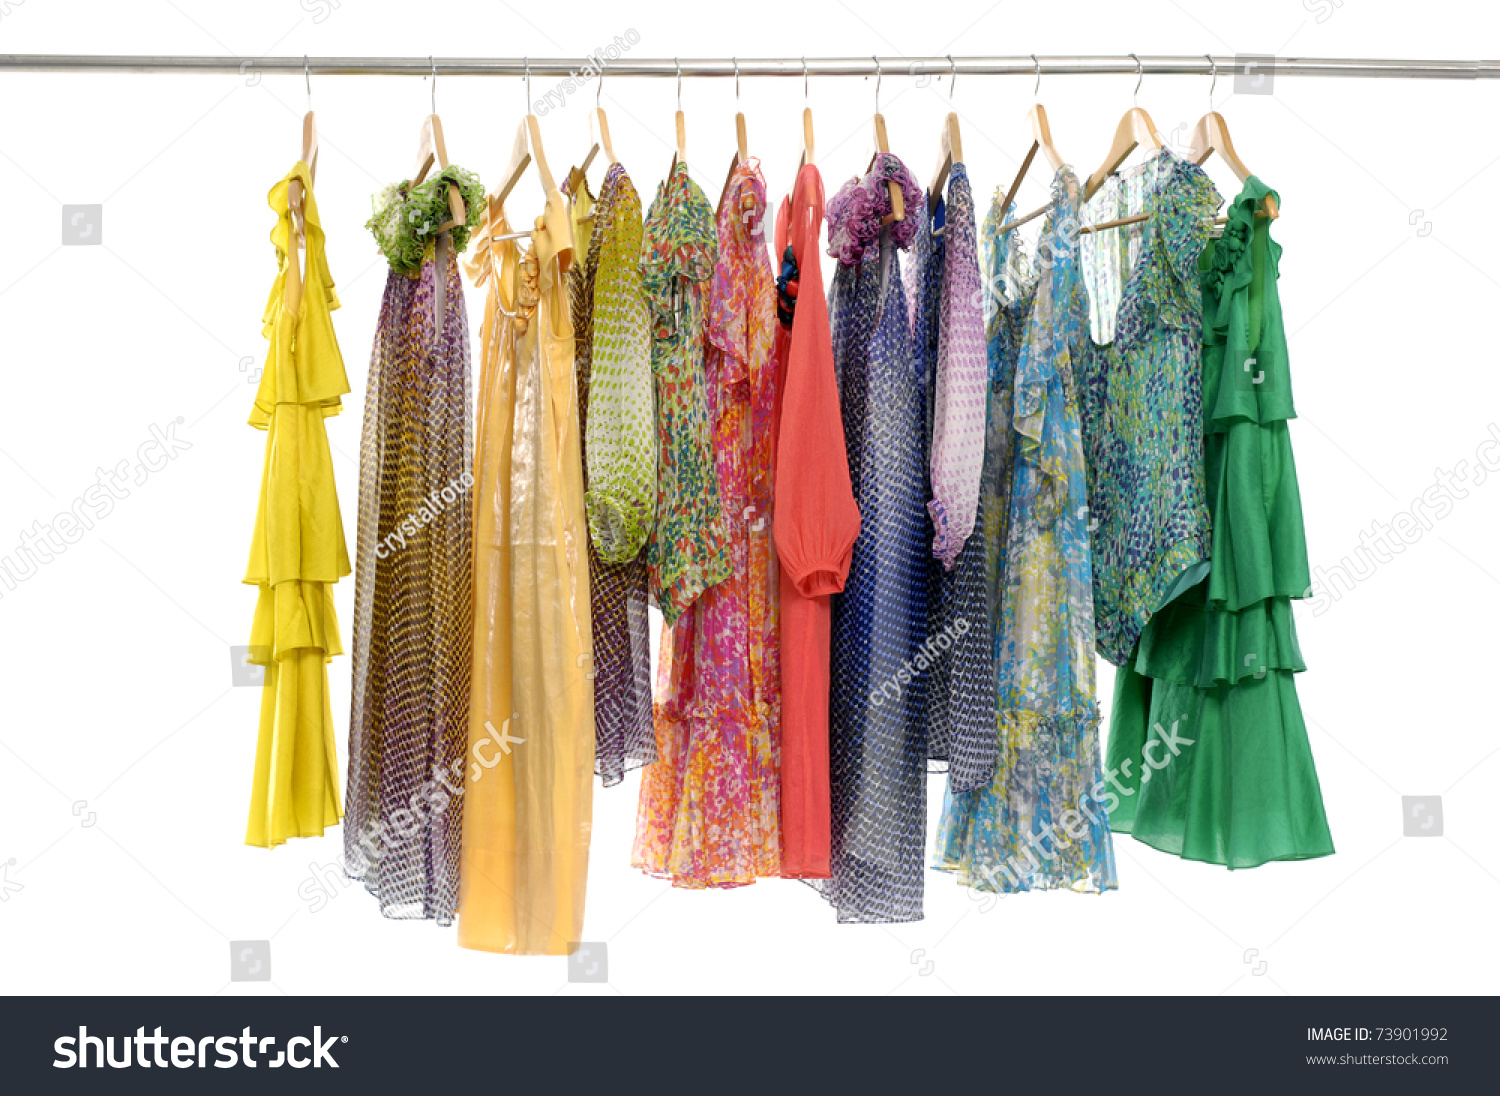 clipart clothes rack - photo #19